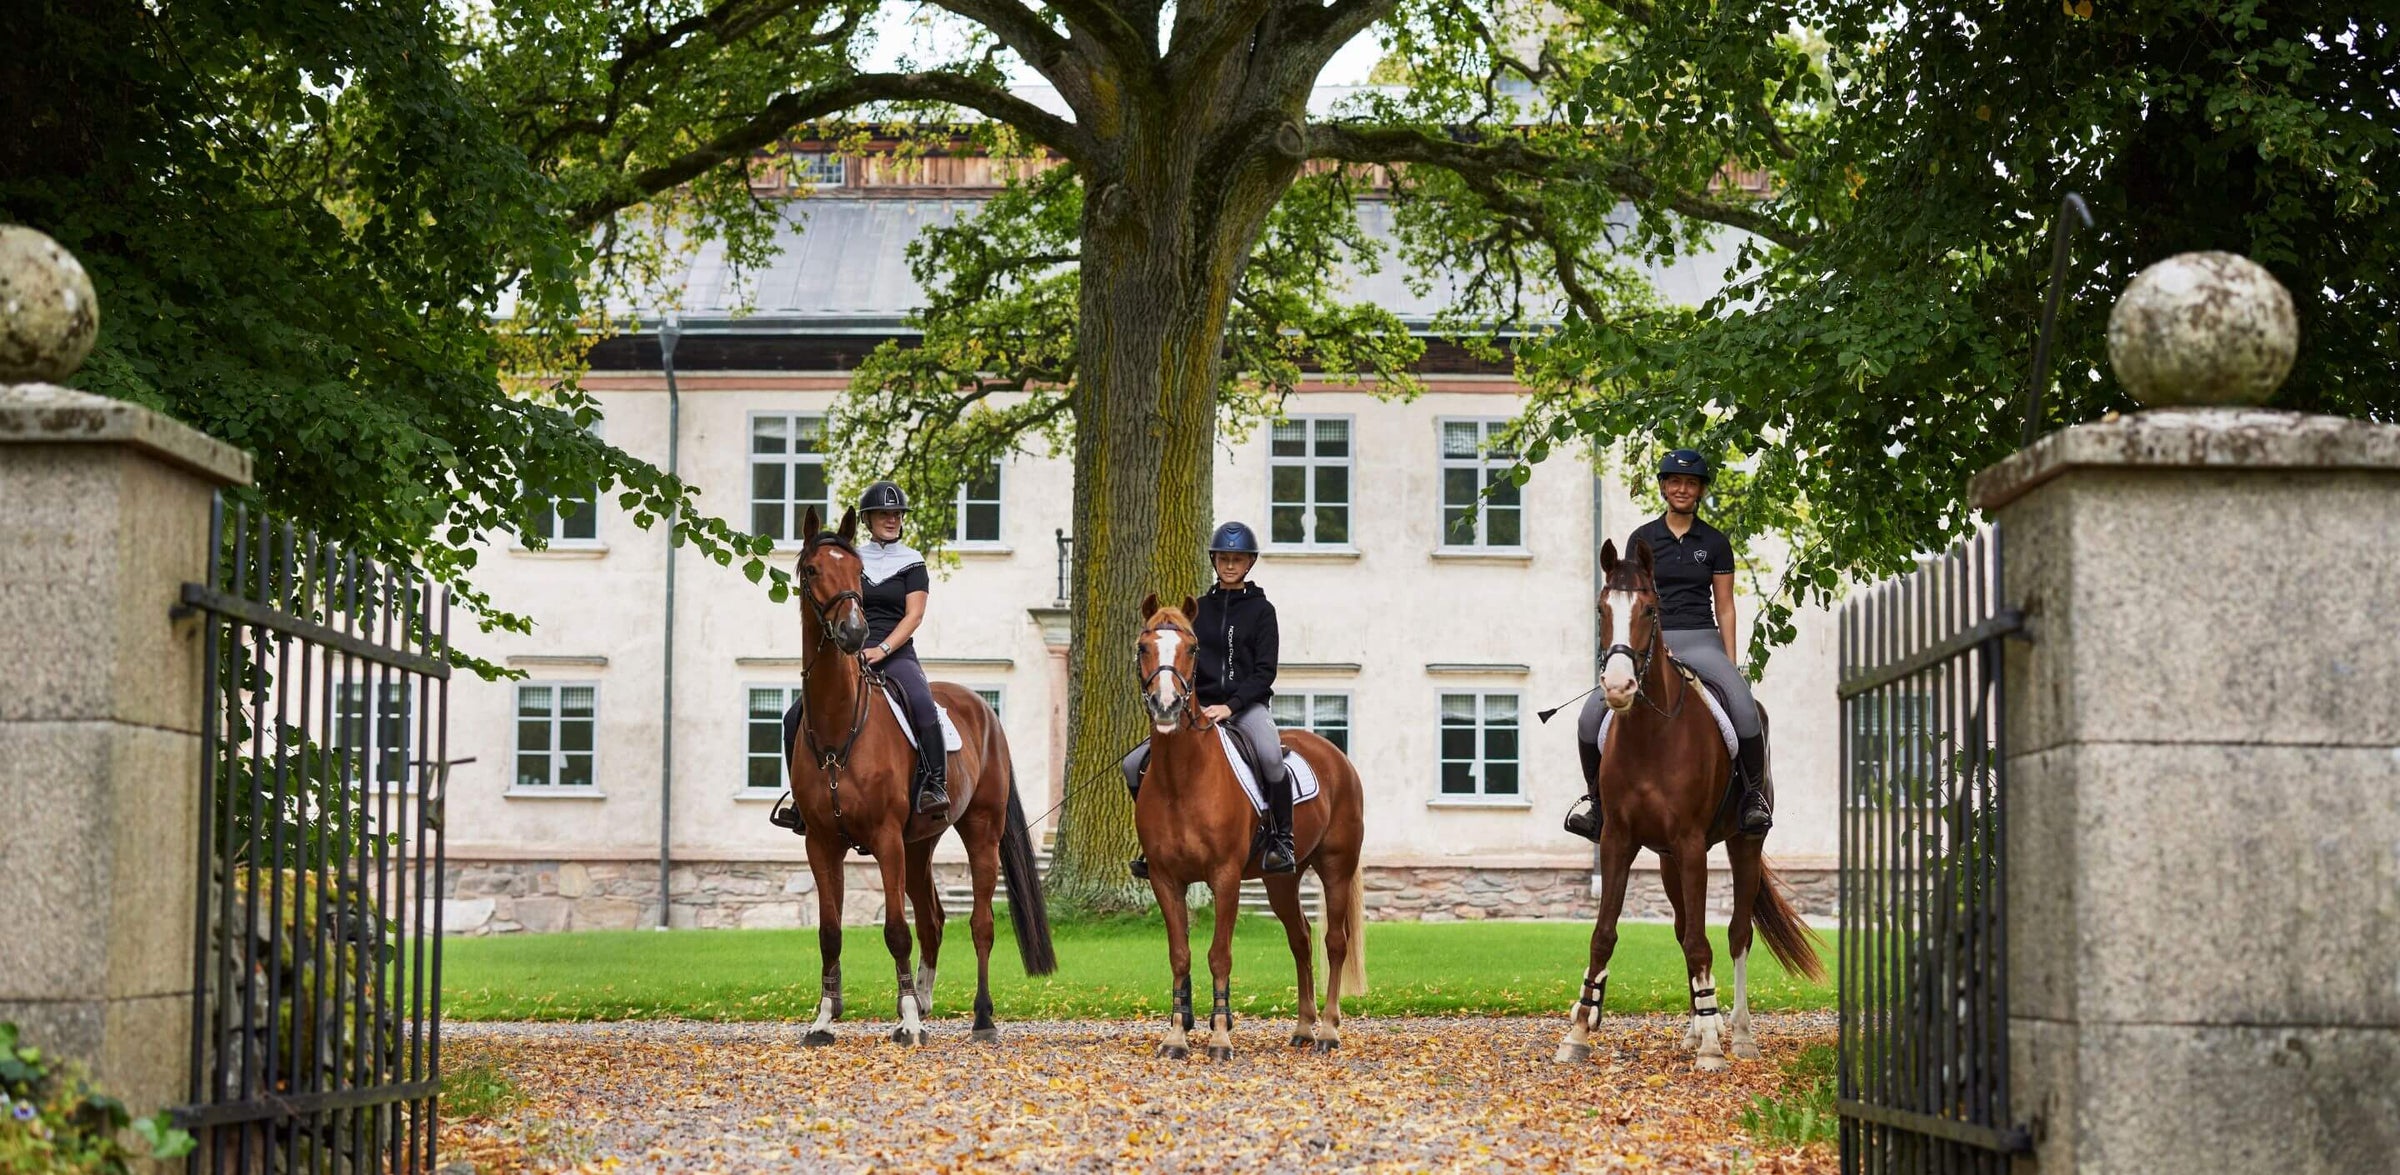 tres jinetes con elegantes prendas de equitación montan a caballo, cada uno en su caballo marrón, frente a una hermosa mansión